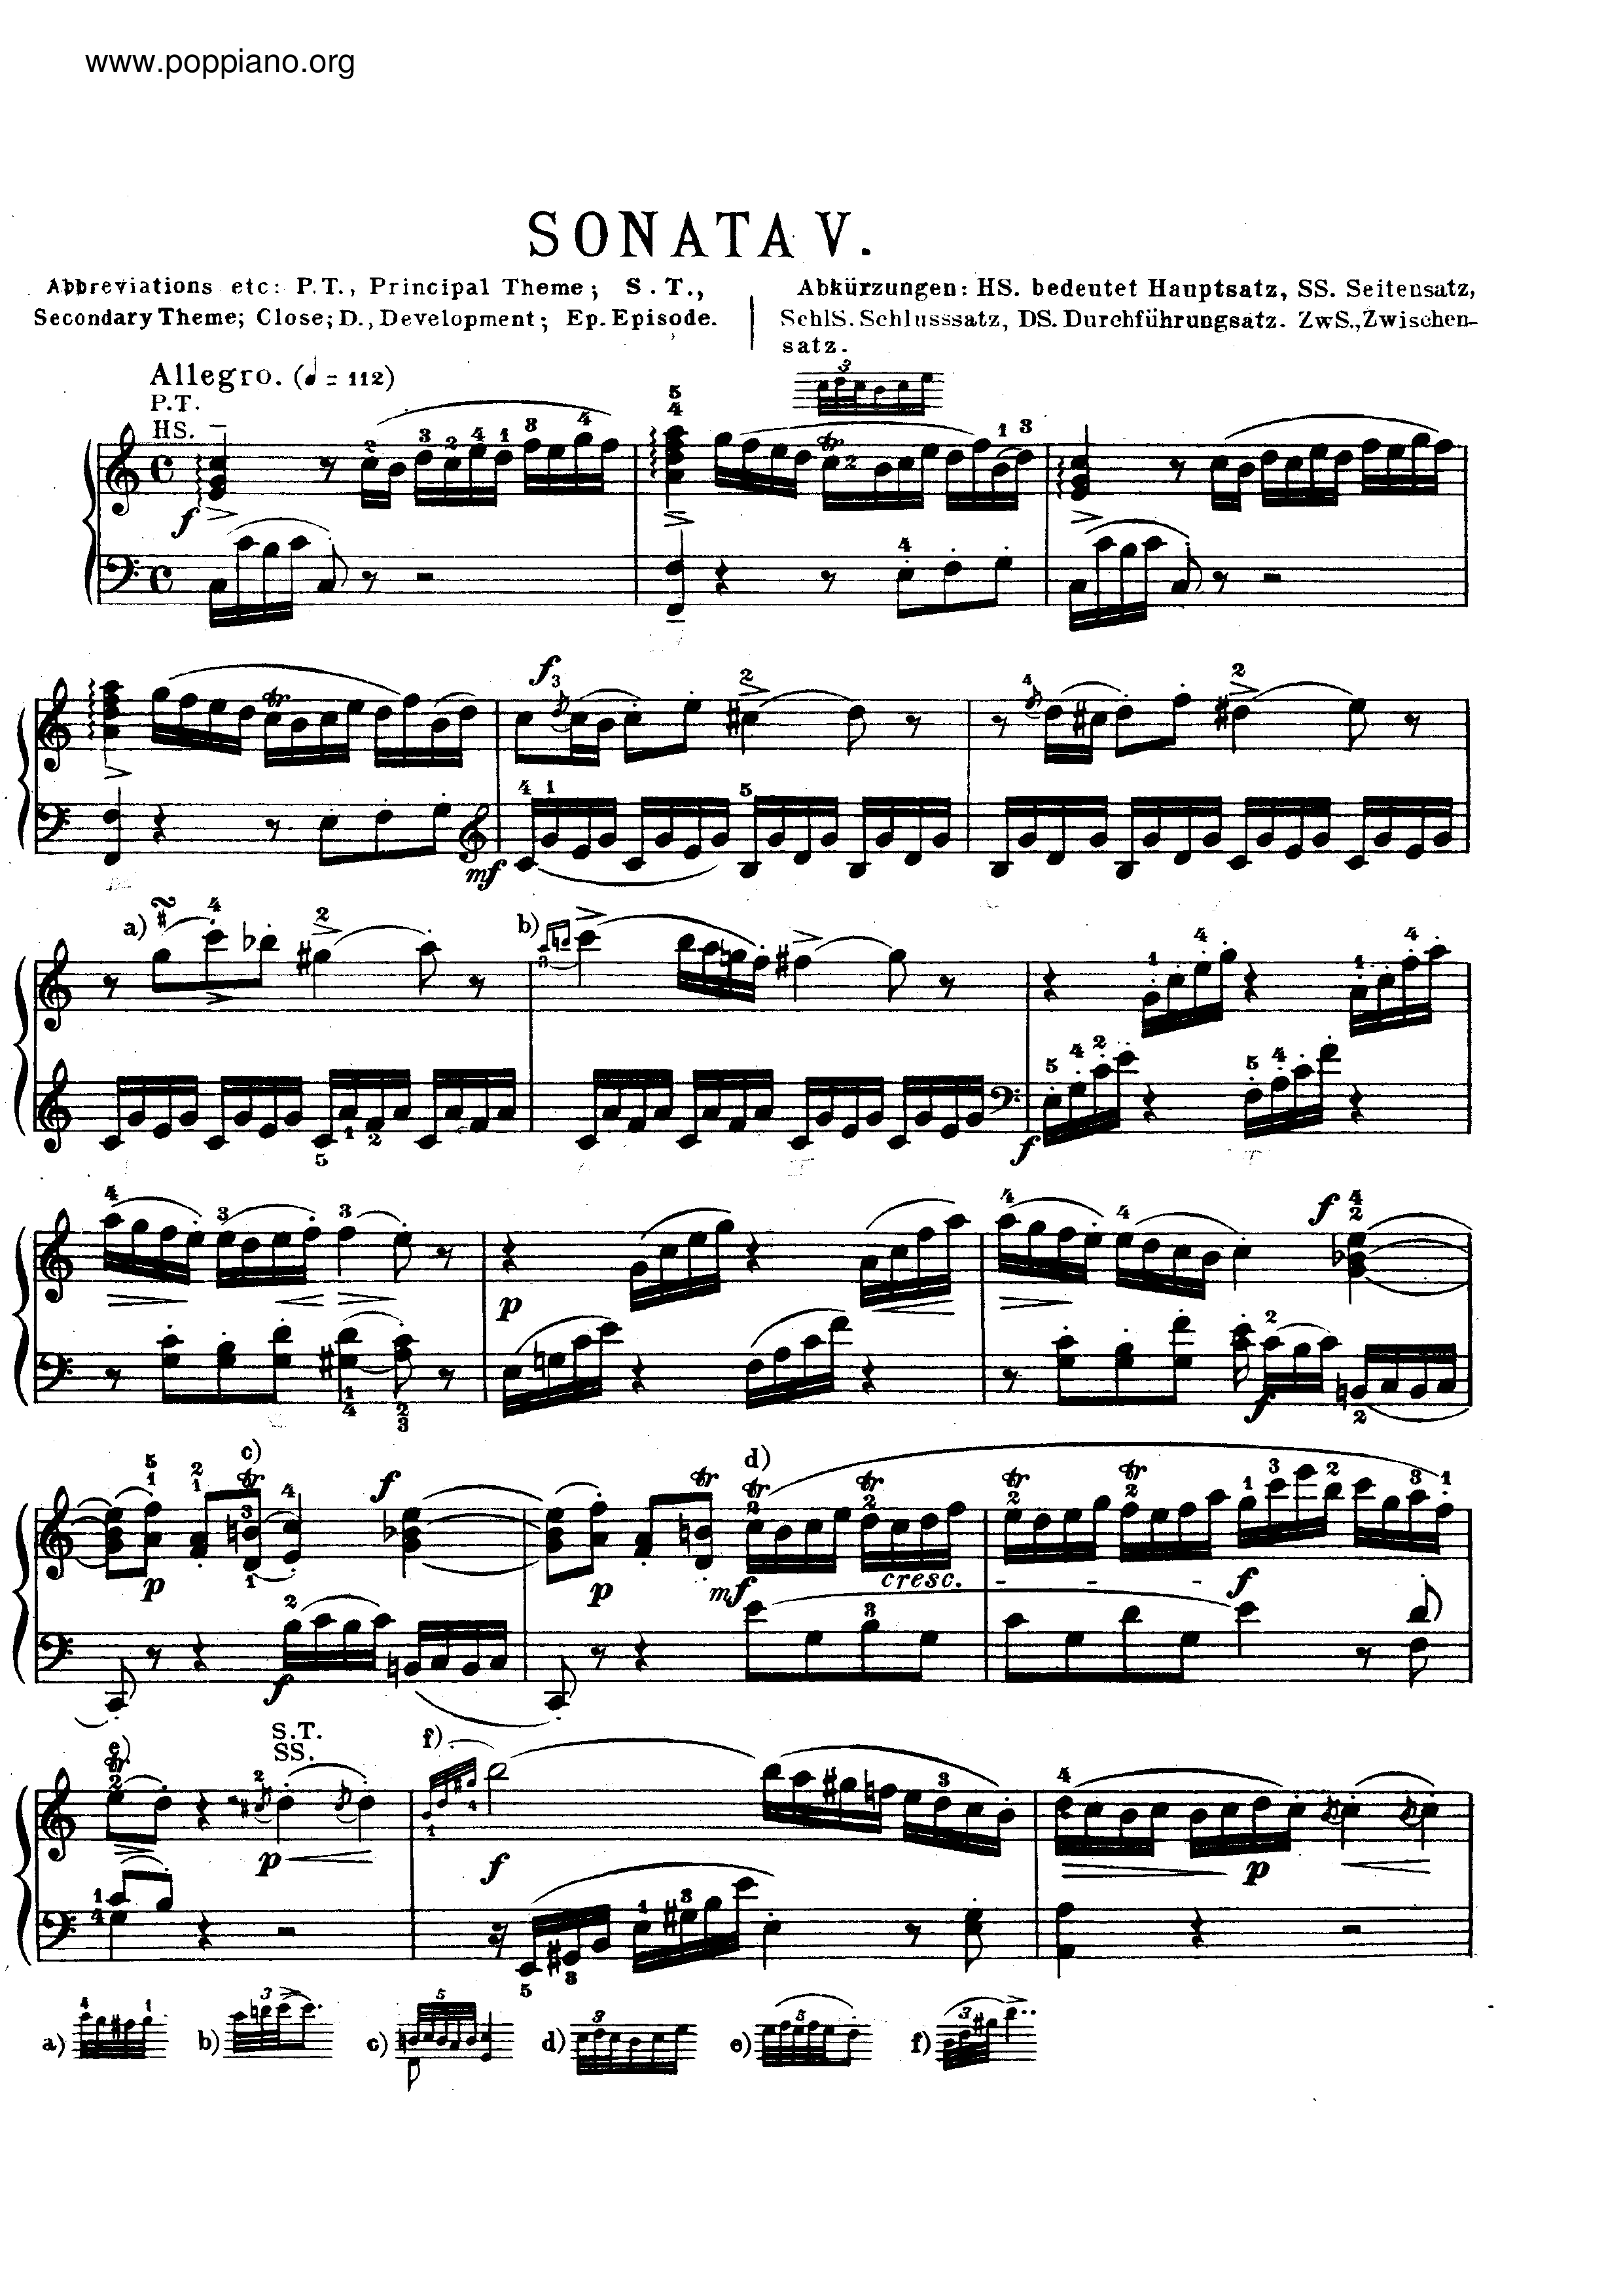 Piano Sonata in C major, K. 279ピアノ譜